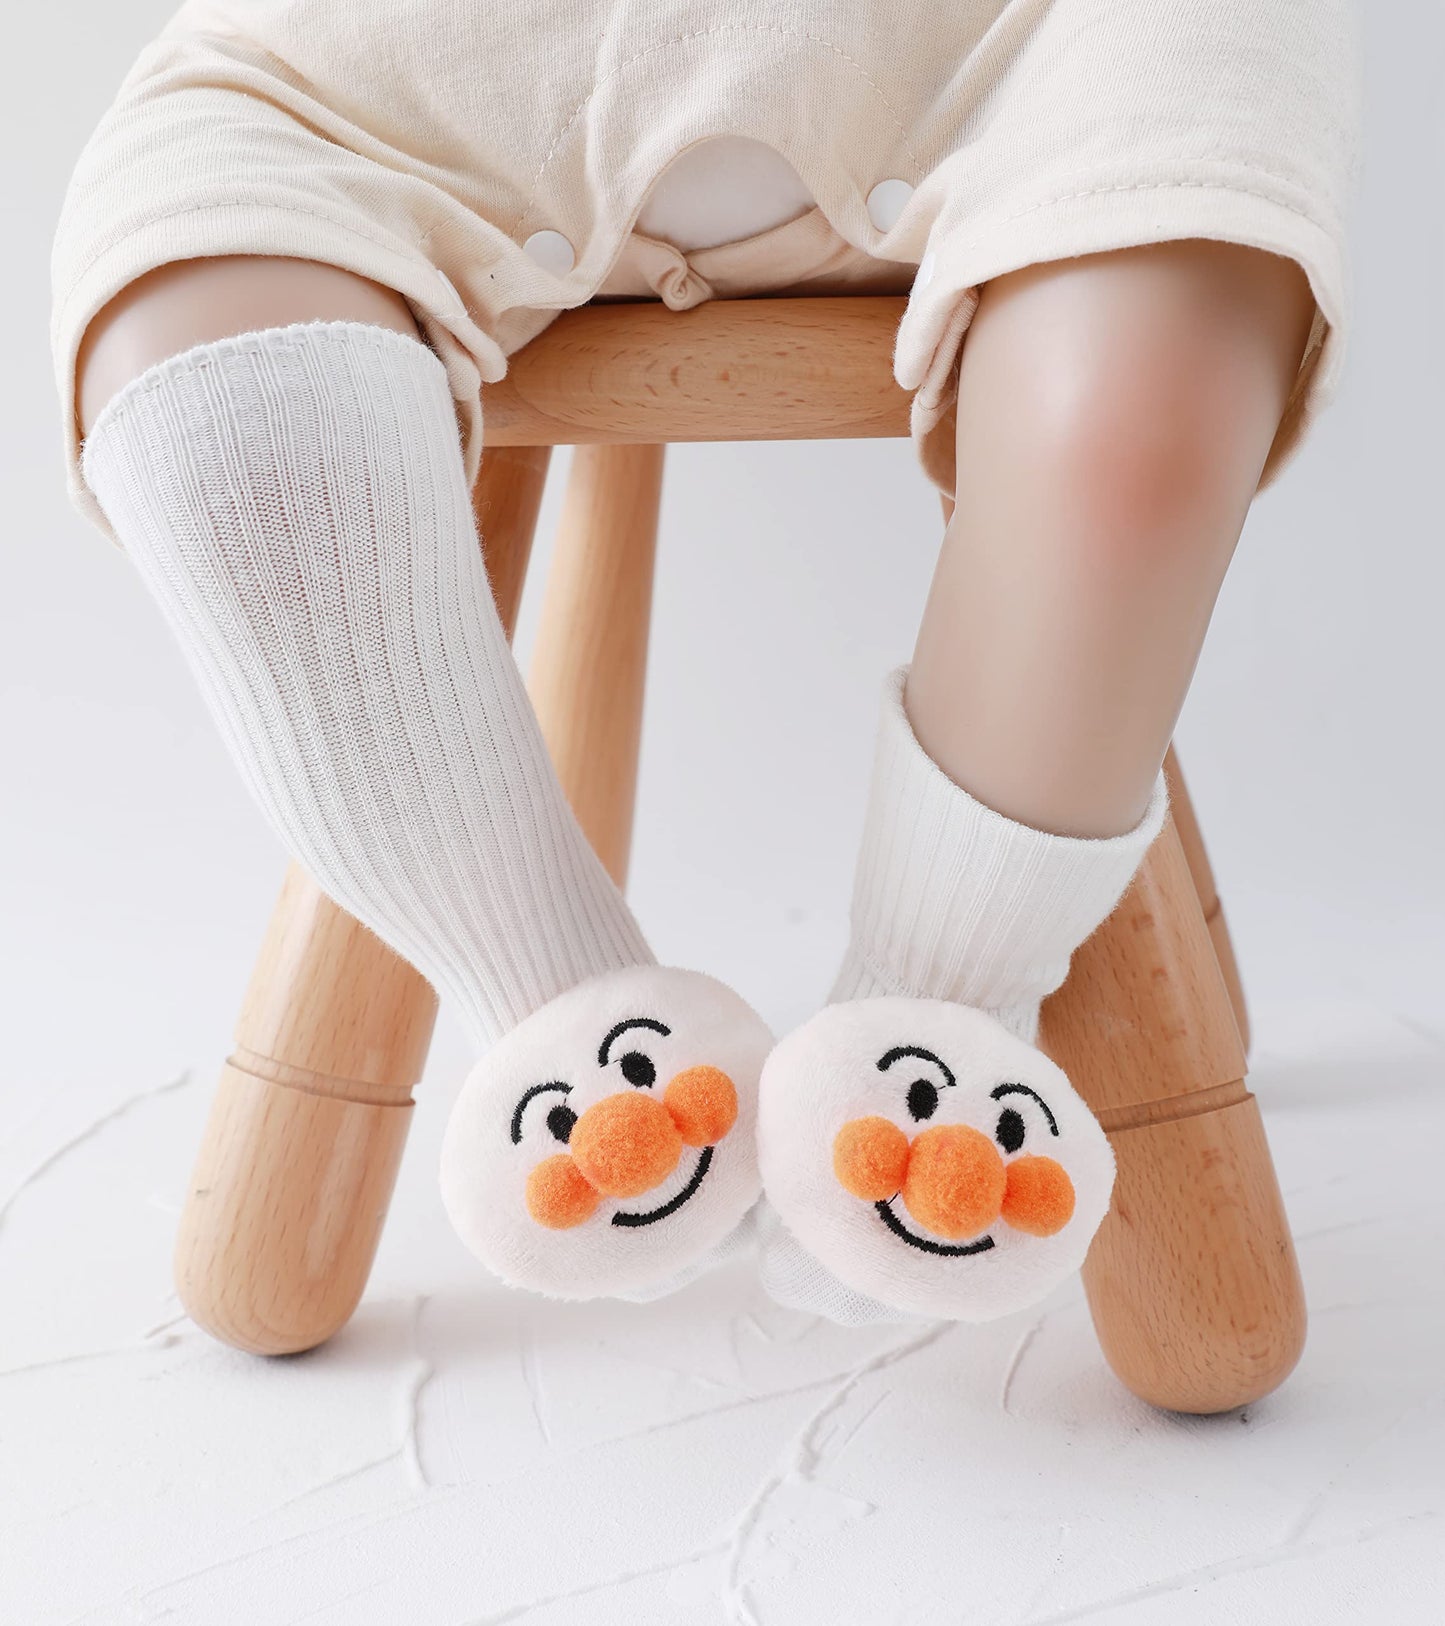 Baby Animal Non-Slip Socks Gift Set,4 Pairs Toddler Infant Newborn Kids Boys Girls Anti Skid 3D Cartoon Socks (0-12 Months)